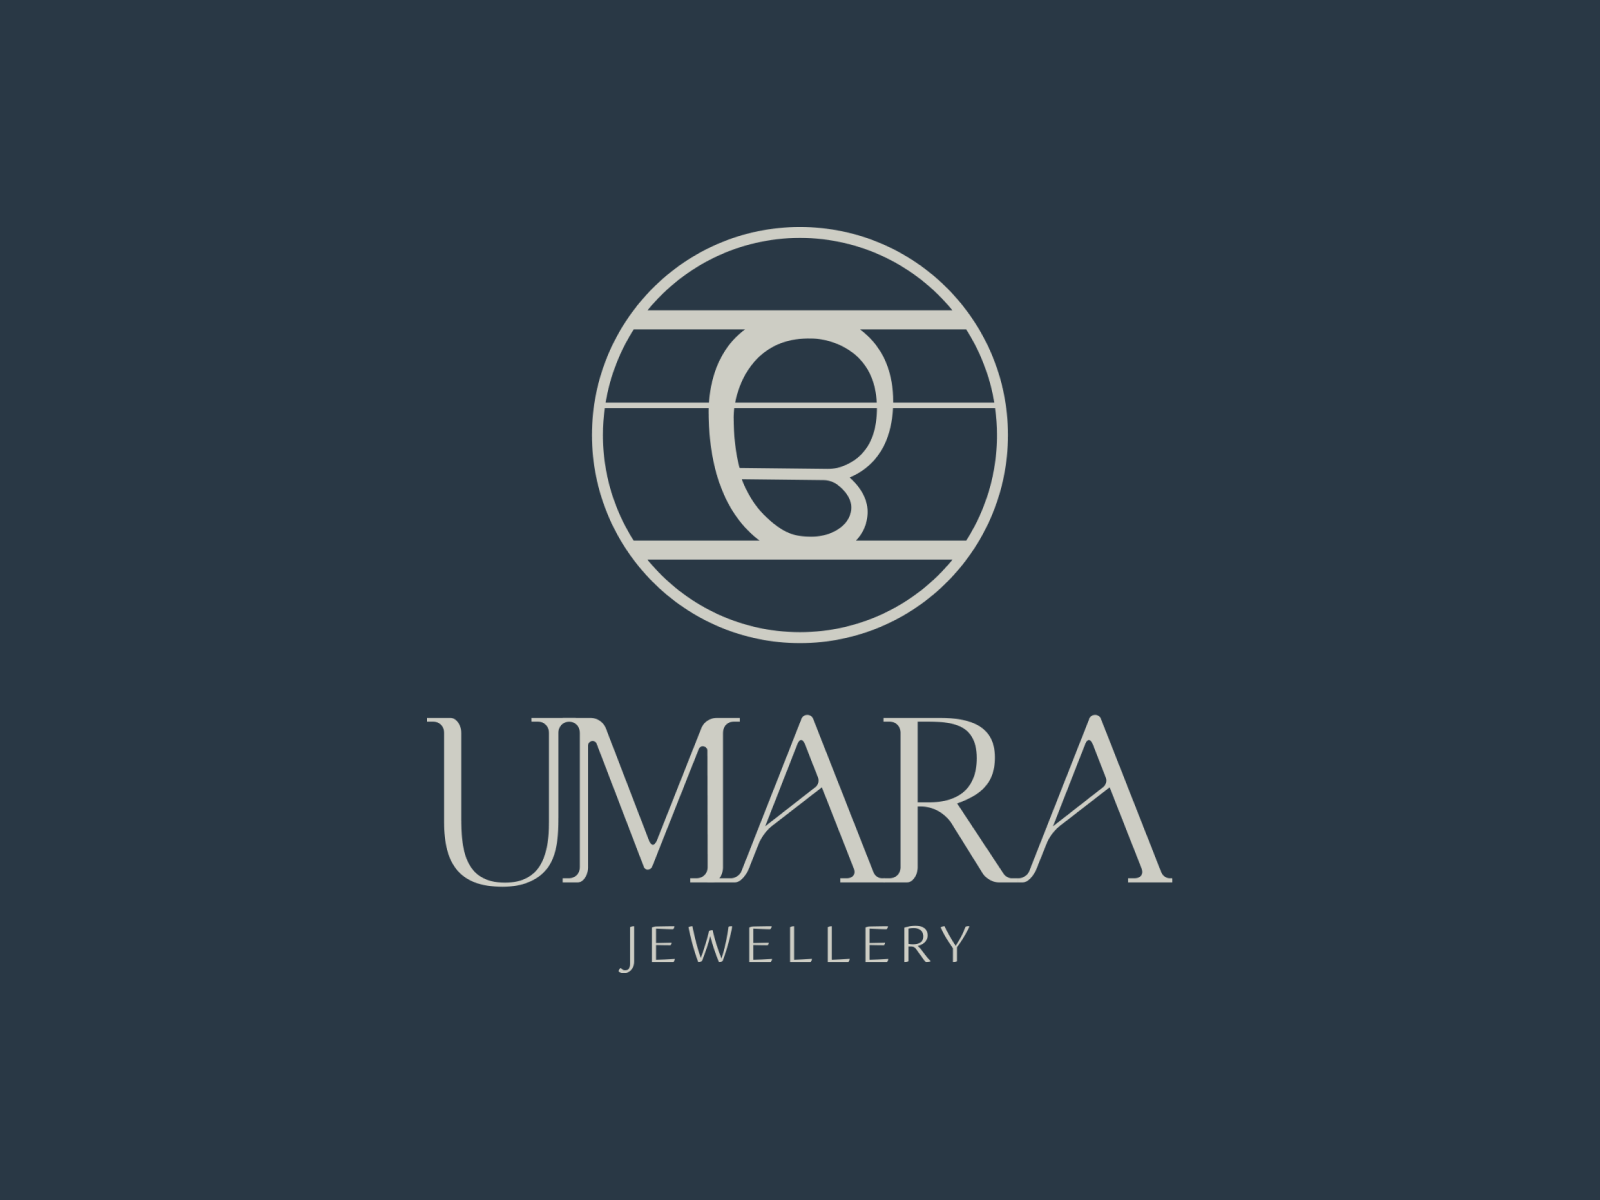 Logo Design - Umara Jewellery by Purdie Gibson on Dribbble